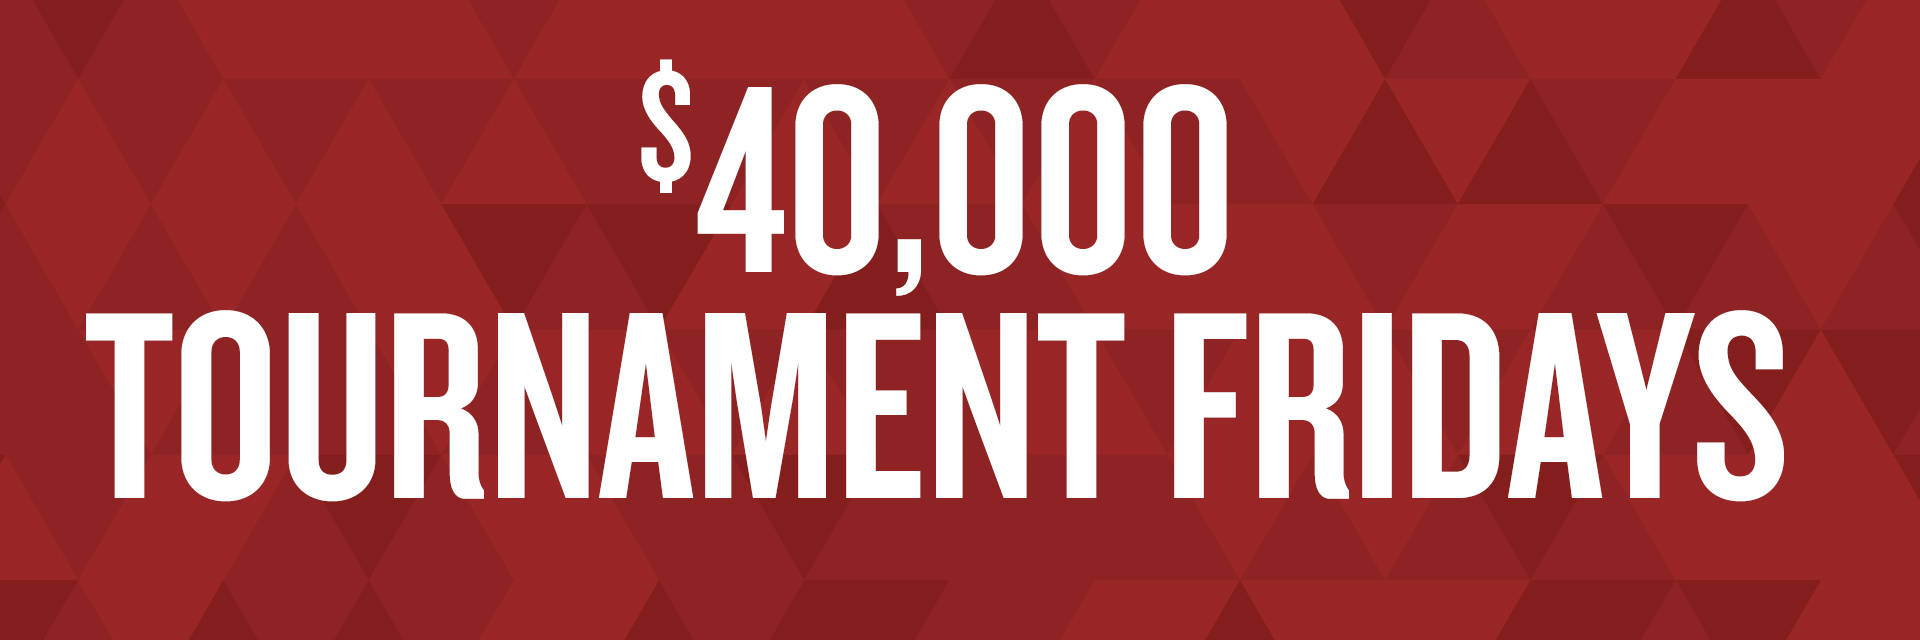 $40,000 TOURNAMENT FRIDAYS